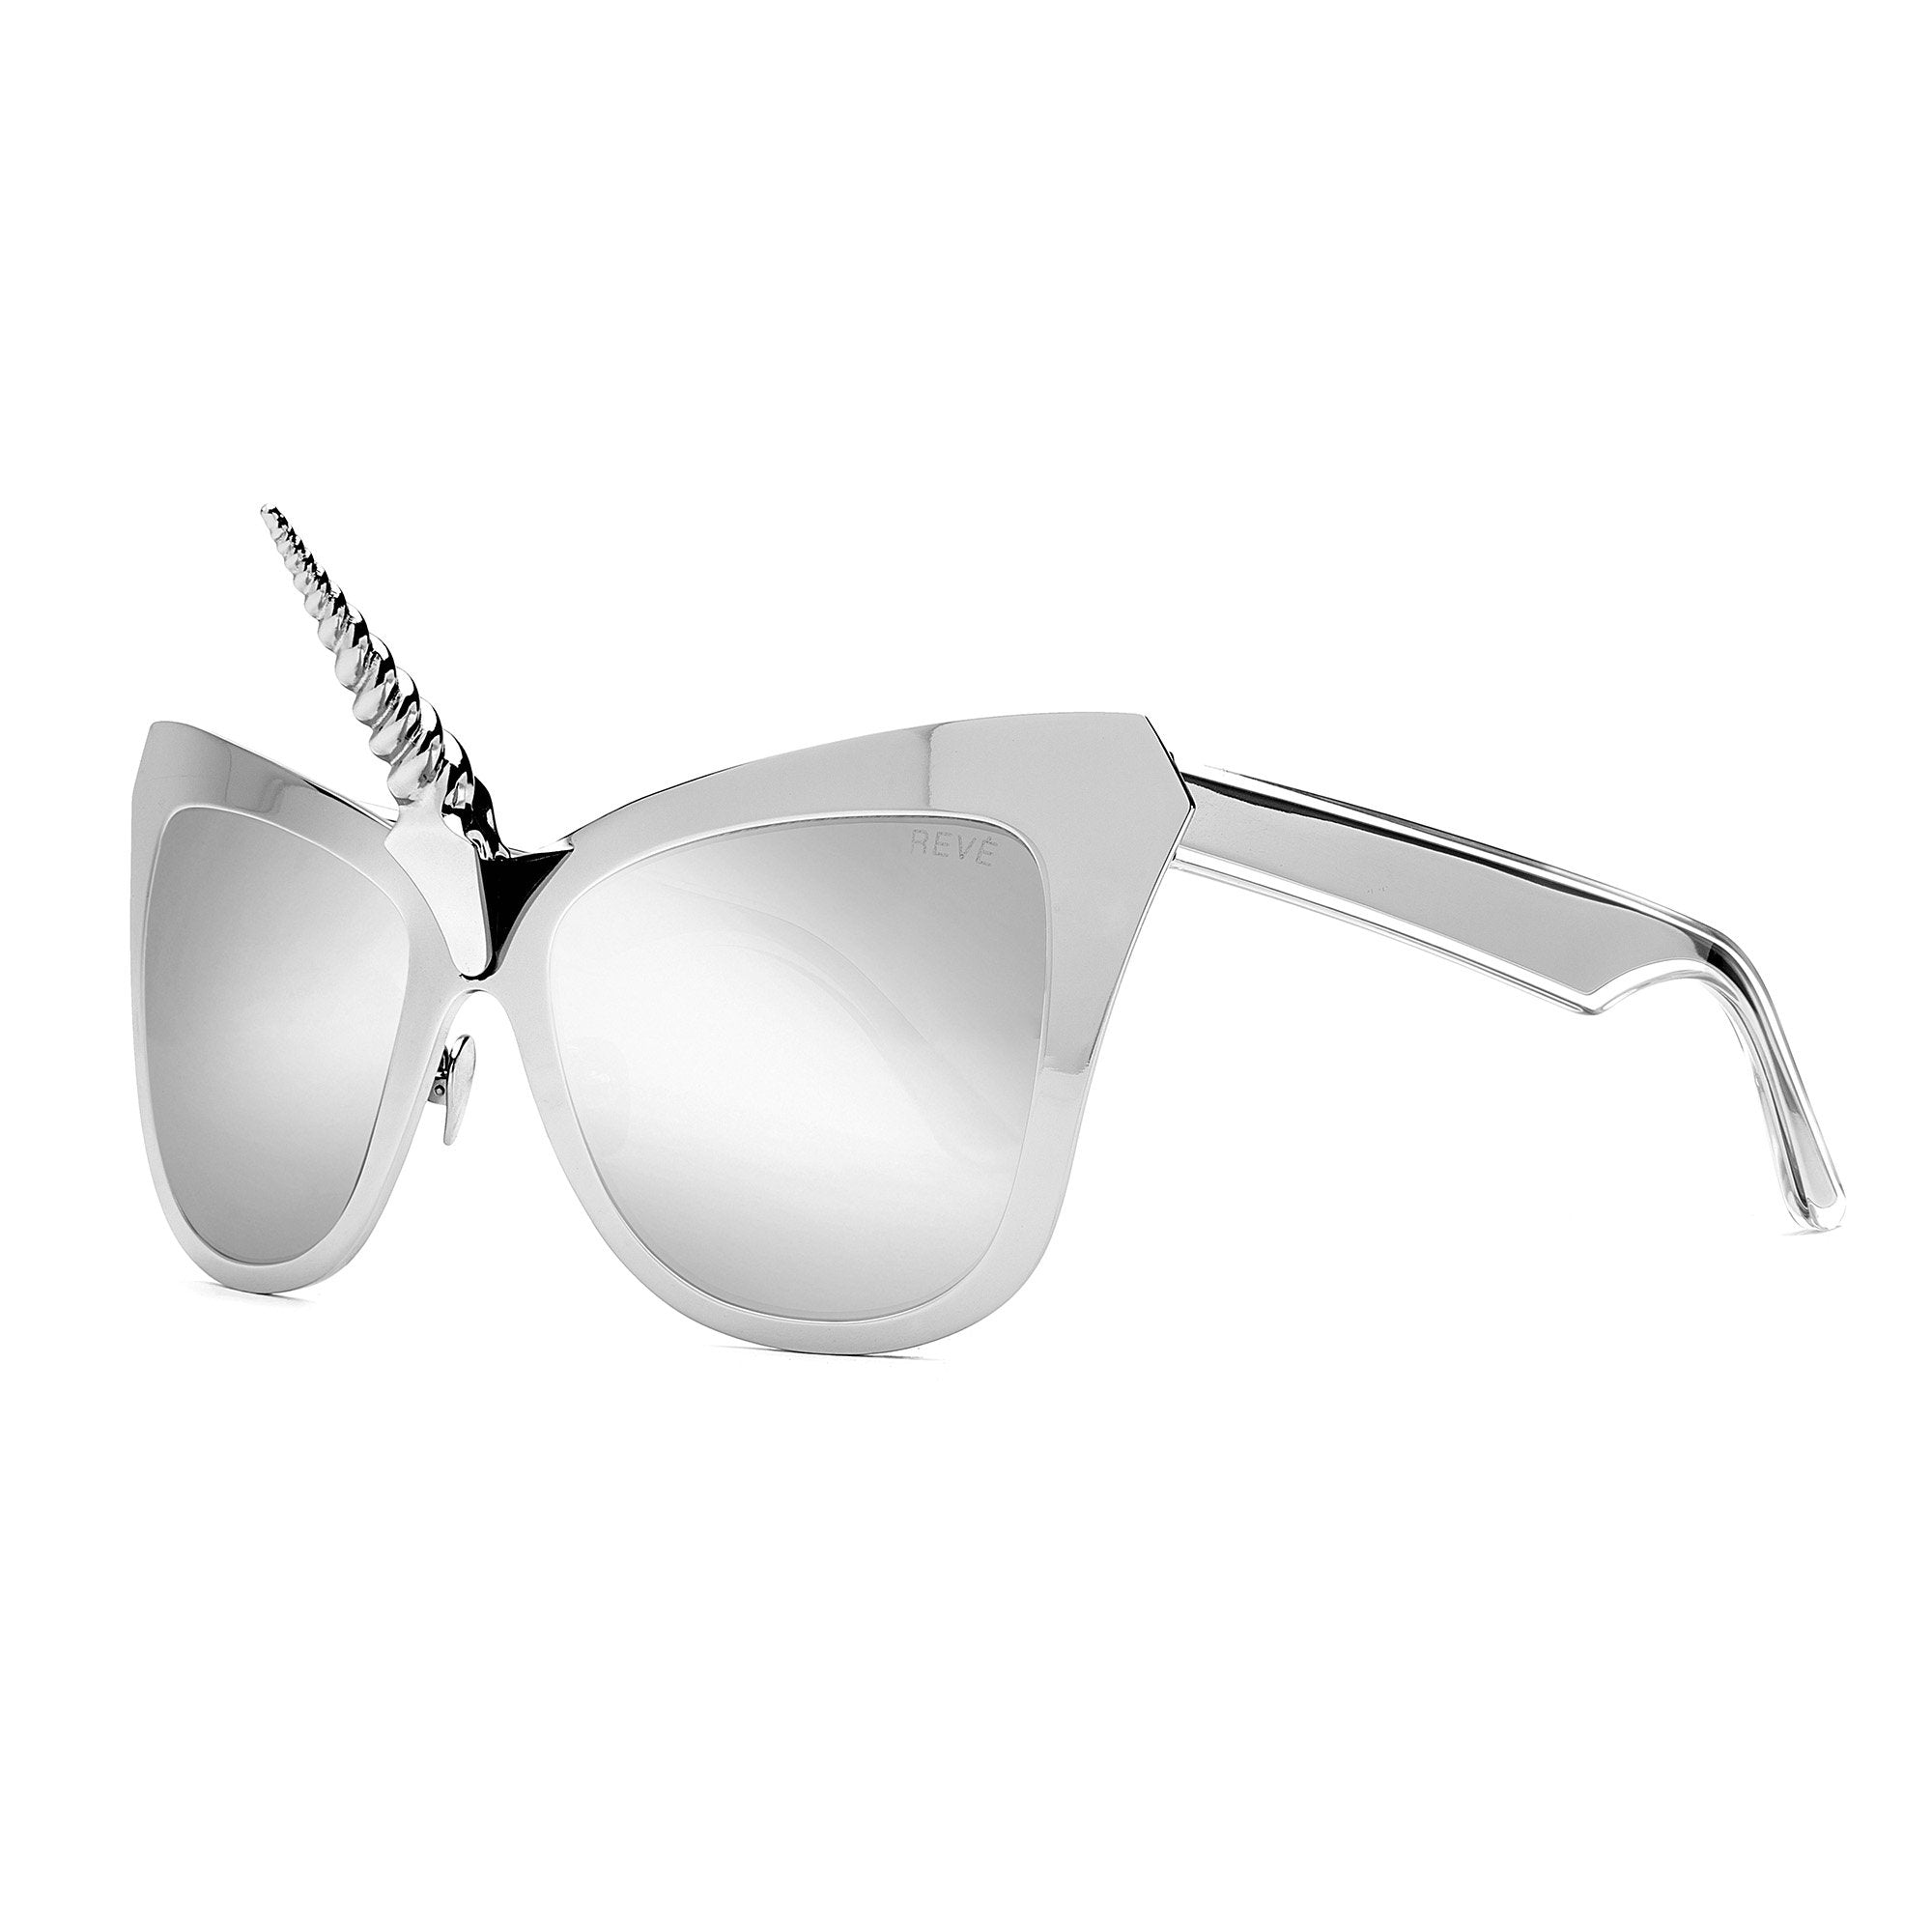 REVE by RENE unicorn i am the limited edition sunglasses